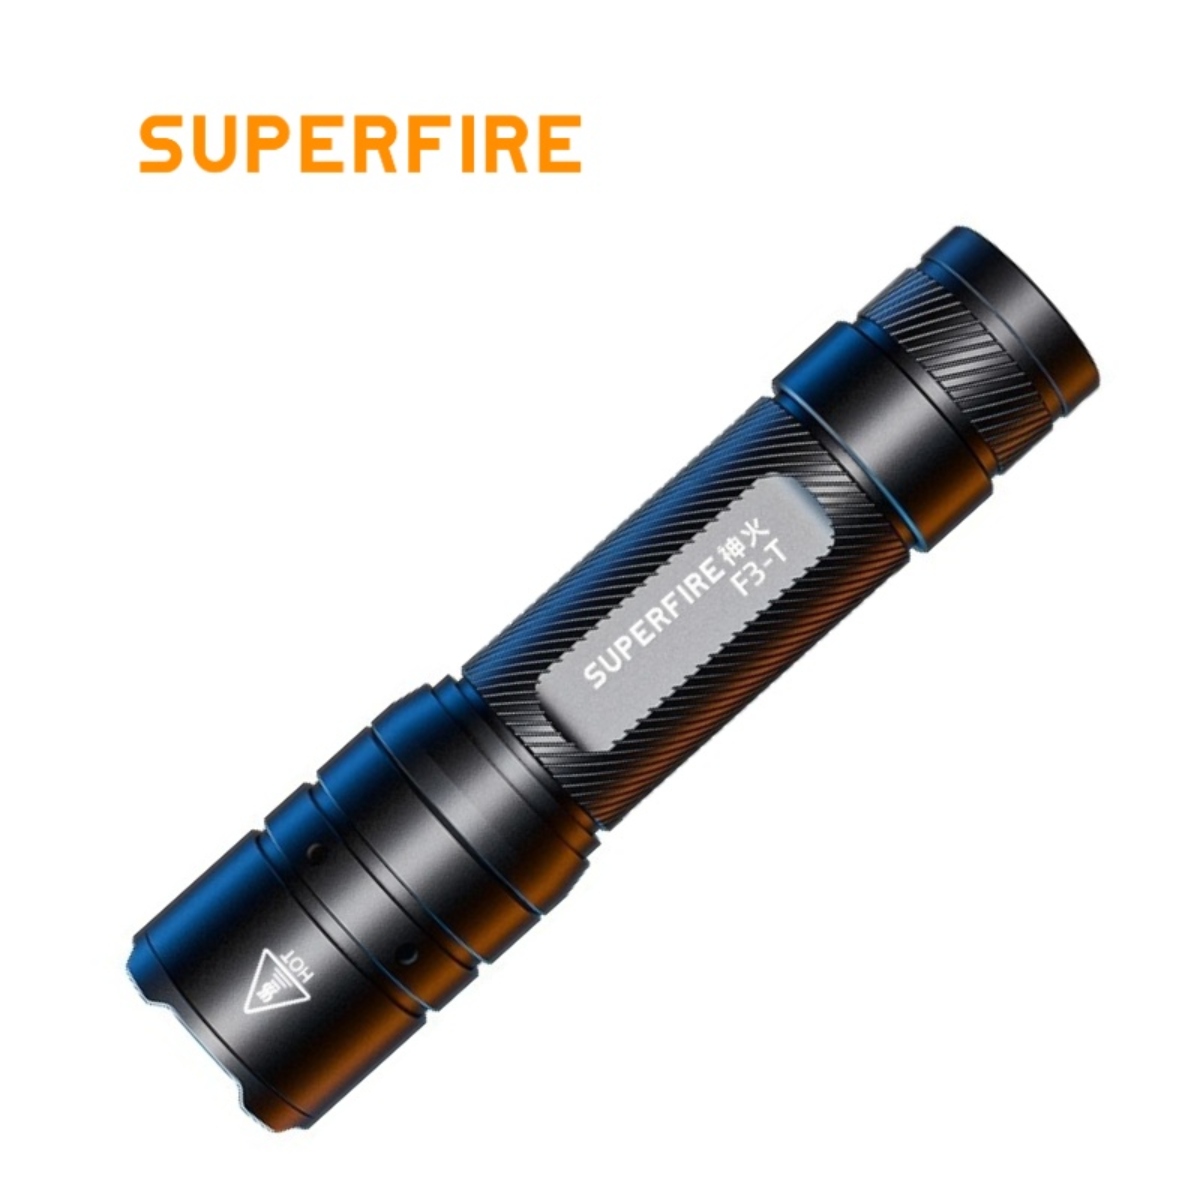 SUPERFIRE F3-T Telescopic Zoom Flashlight